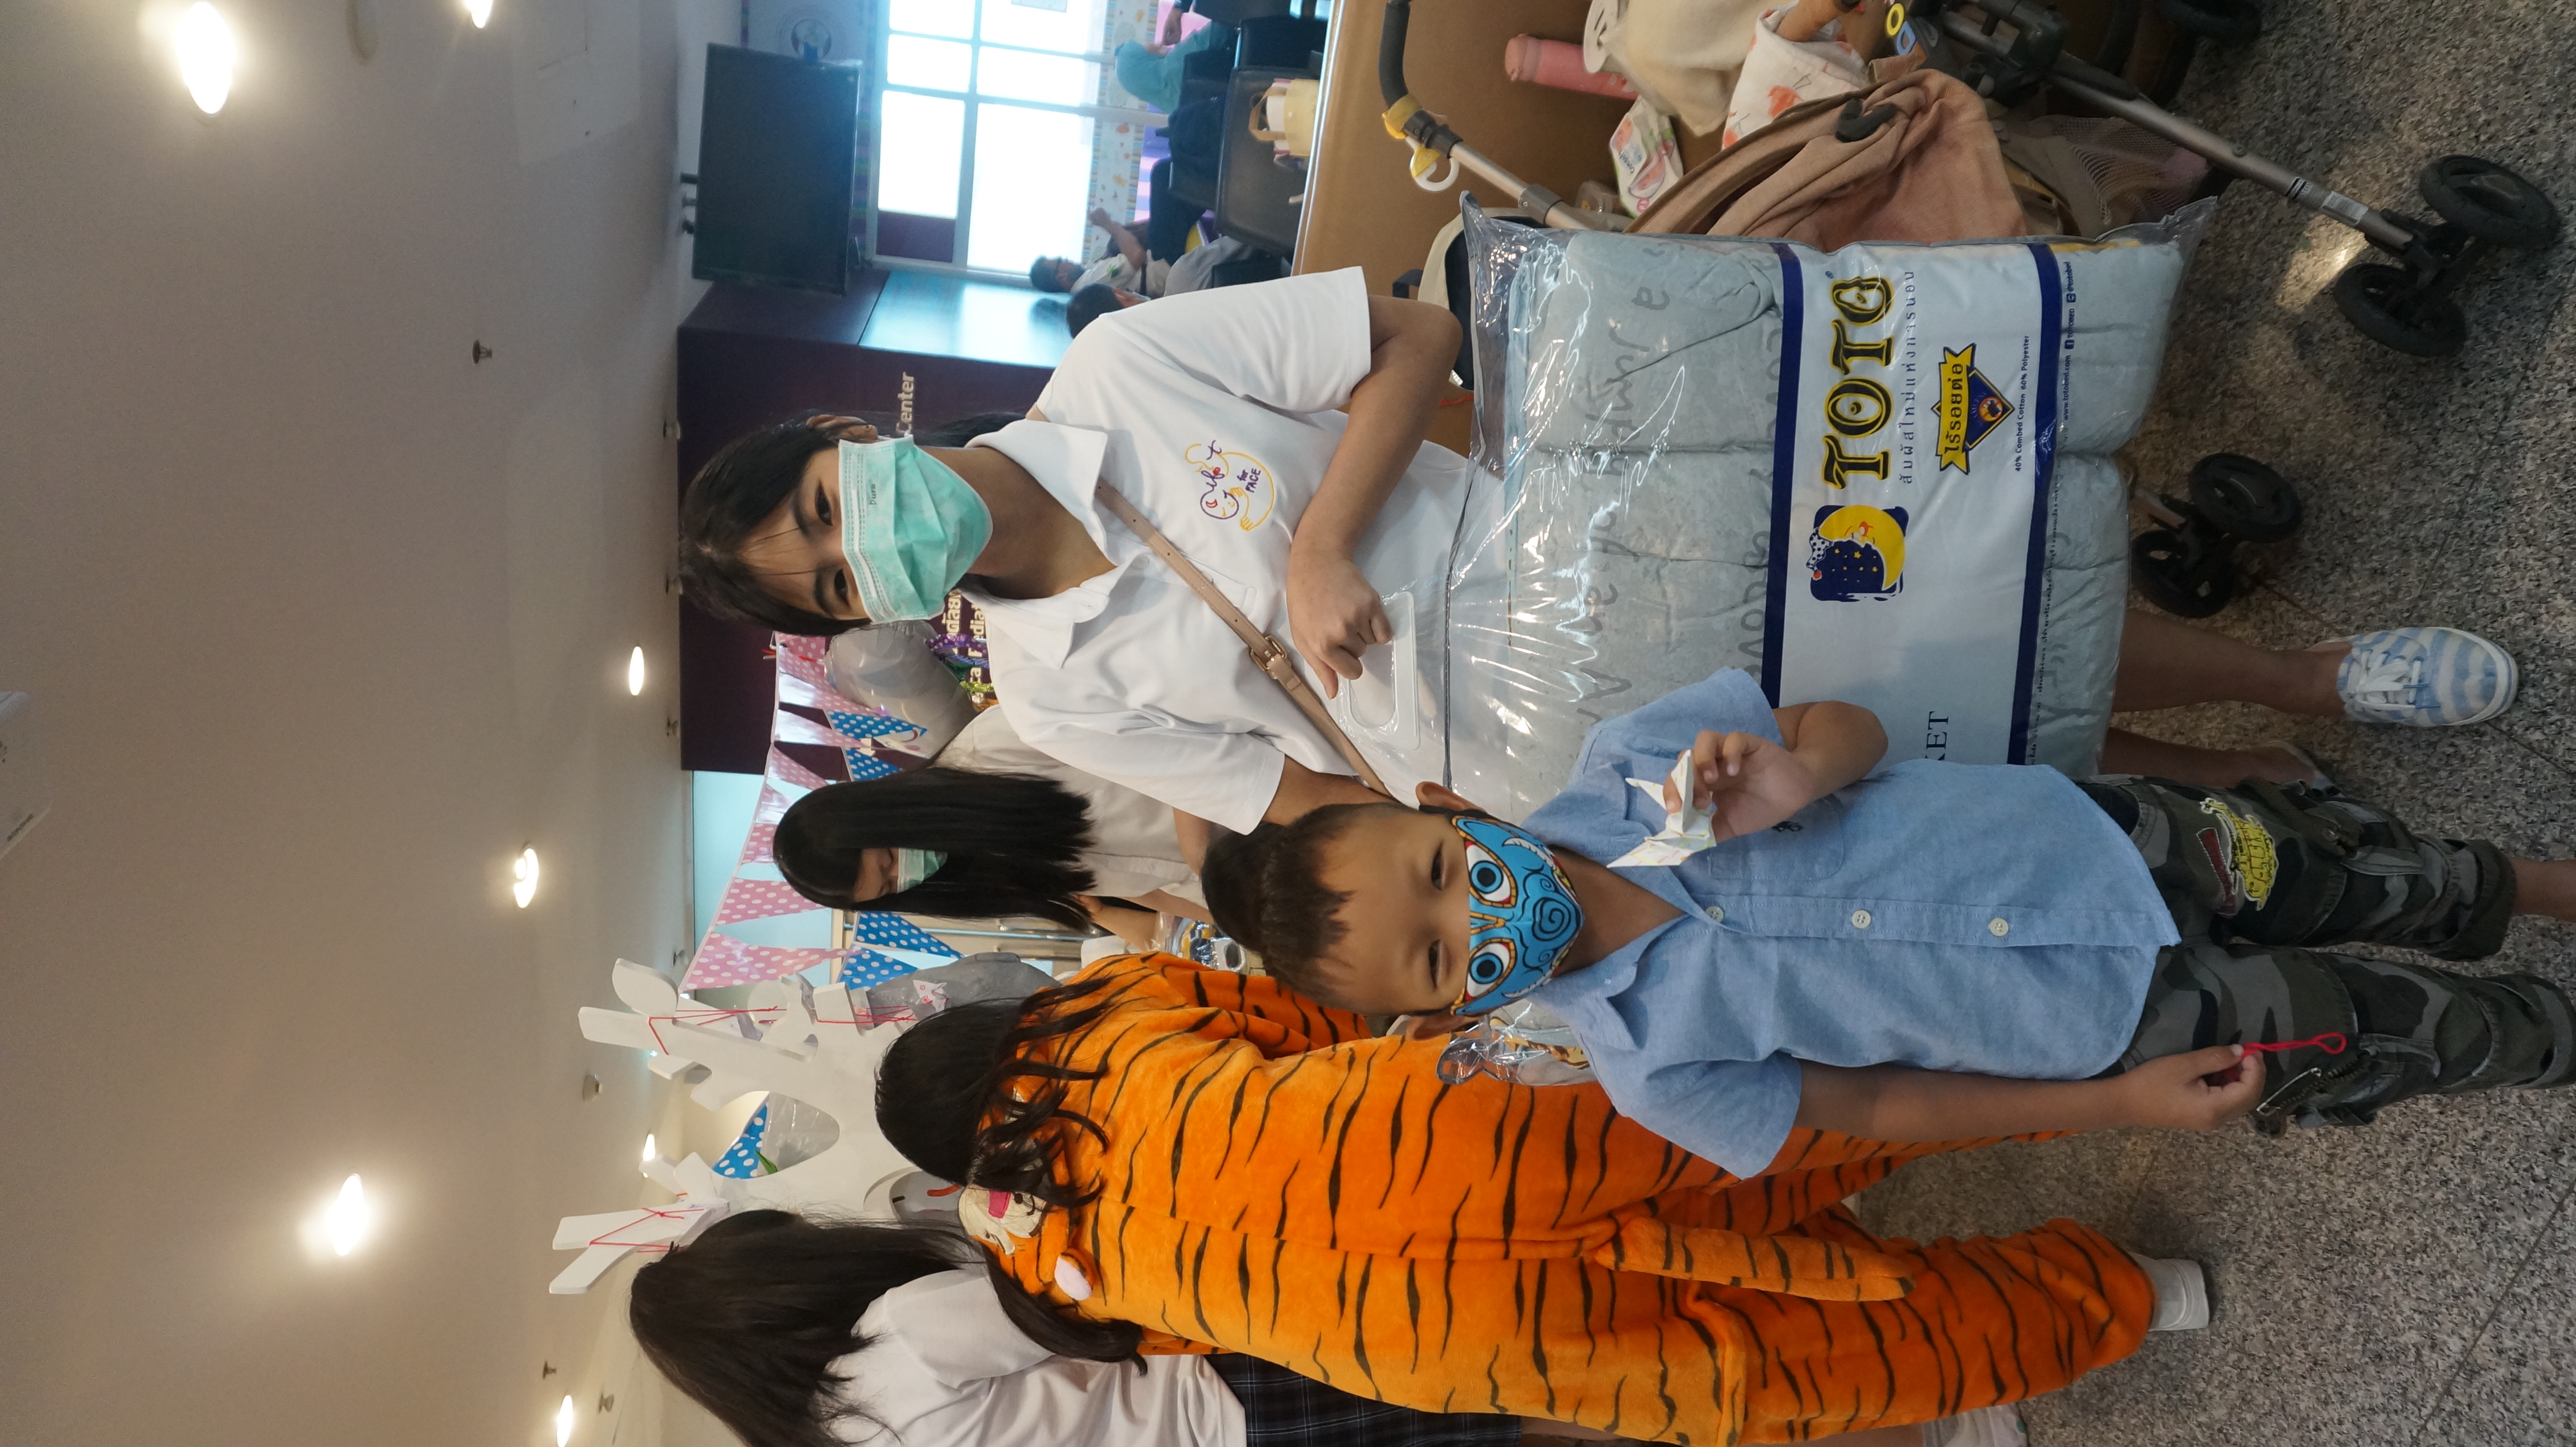 Funday Monday กิจกรรมสันทนาการระหว่างผู้ป่วยเด็กที่มารอรับการตรวจที่ศูนย์สมเด็จพระเทพรัตน​ฯ​ แก้ไขความพิการบนใบหน้าและศีรษะ โรงพยาบาลจุฬาลงกรณ์​ สภากาชาดไทย